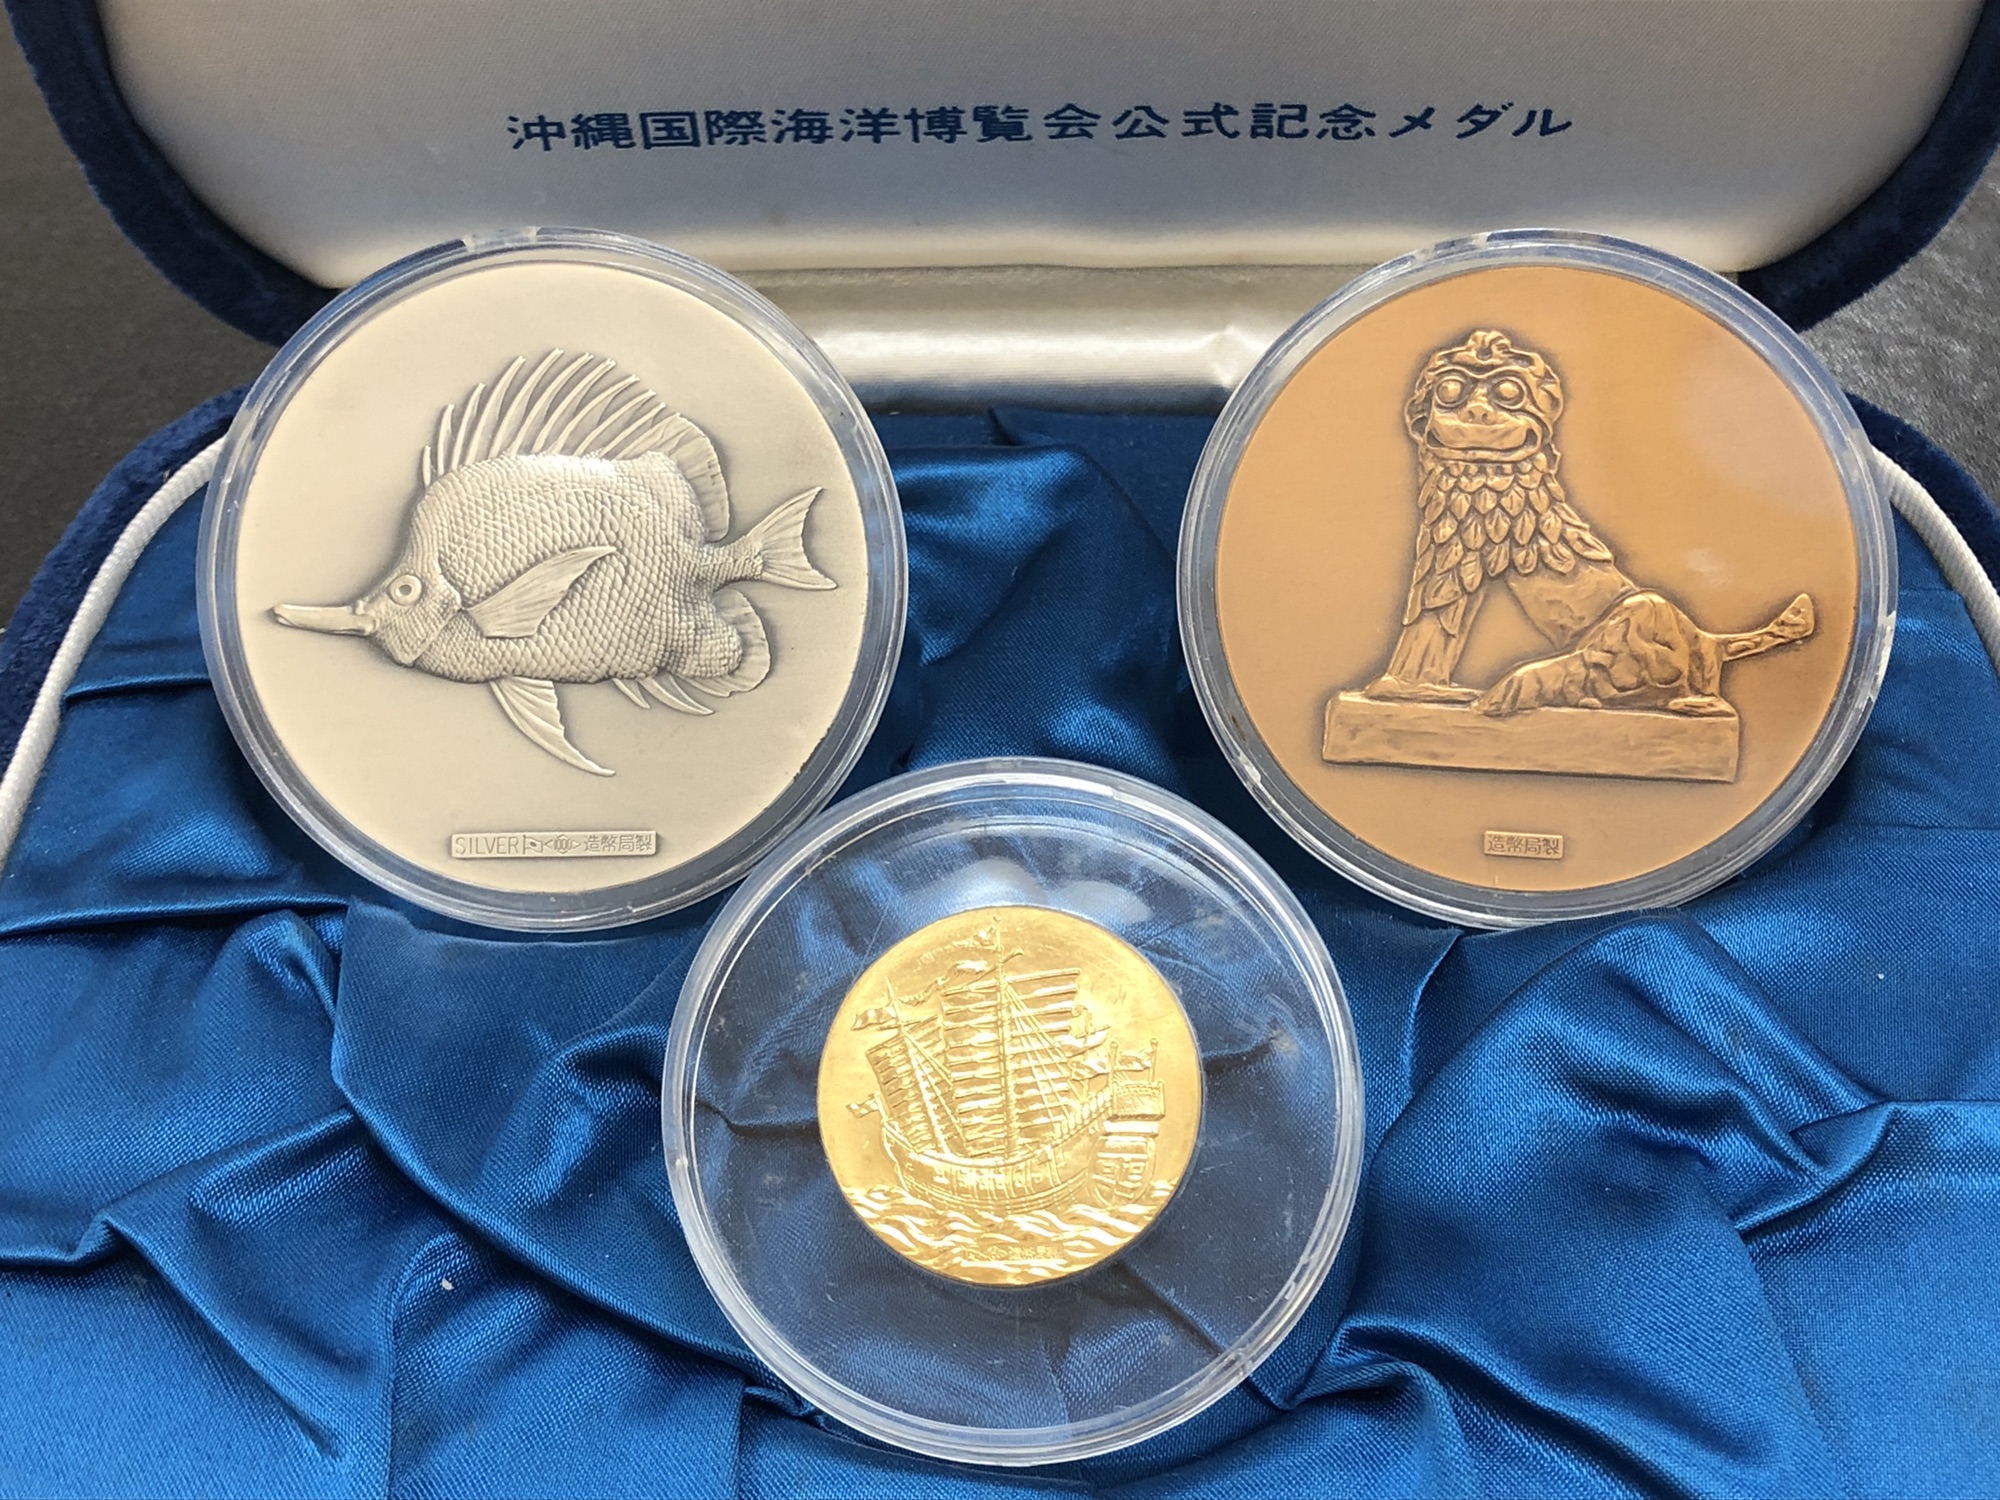 沖縄国際海洋博覧会公式記念メダル | labiela.com